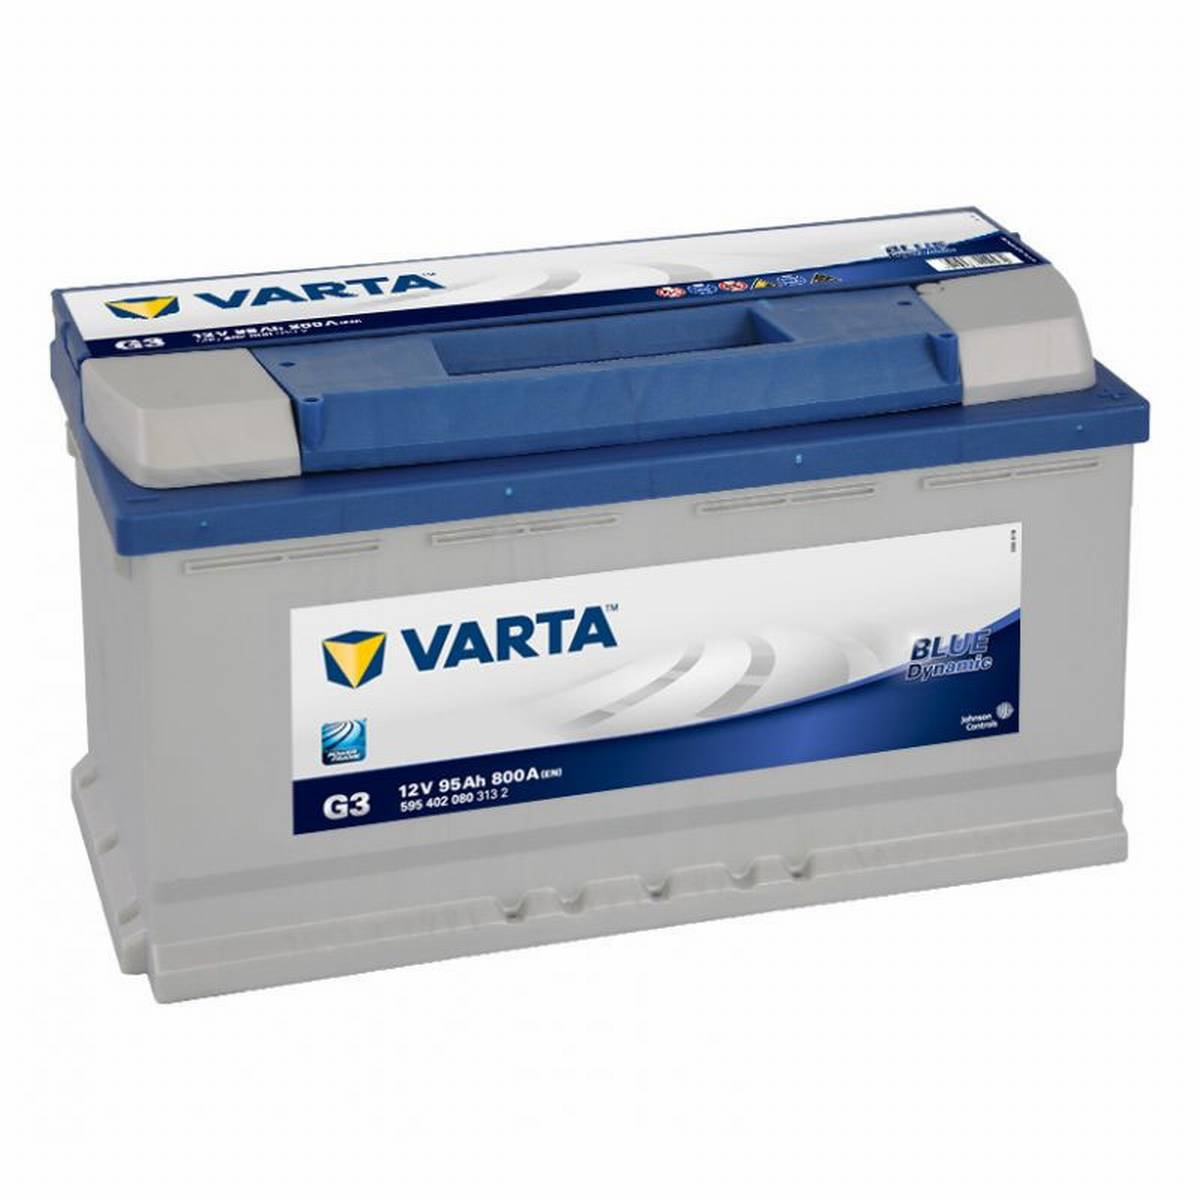 Blauwe plek Nachtvlek heet Varta BLUE Dynamic 595 402 080 3132 G3 12V 95Ah 800A/EN car battery |  Starter batteries | Boots & Marine | Batteries by application |  Akkusys.Shop International